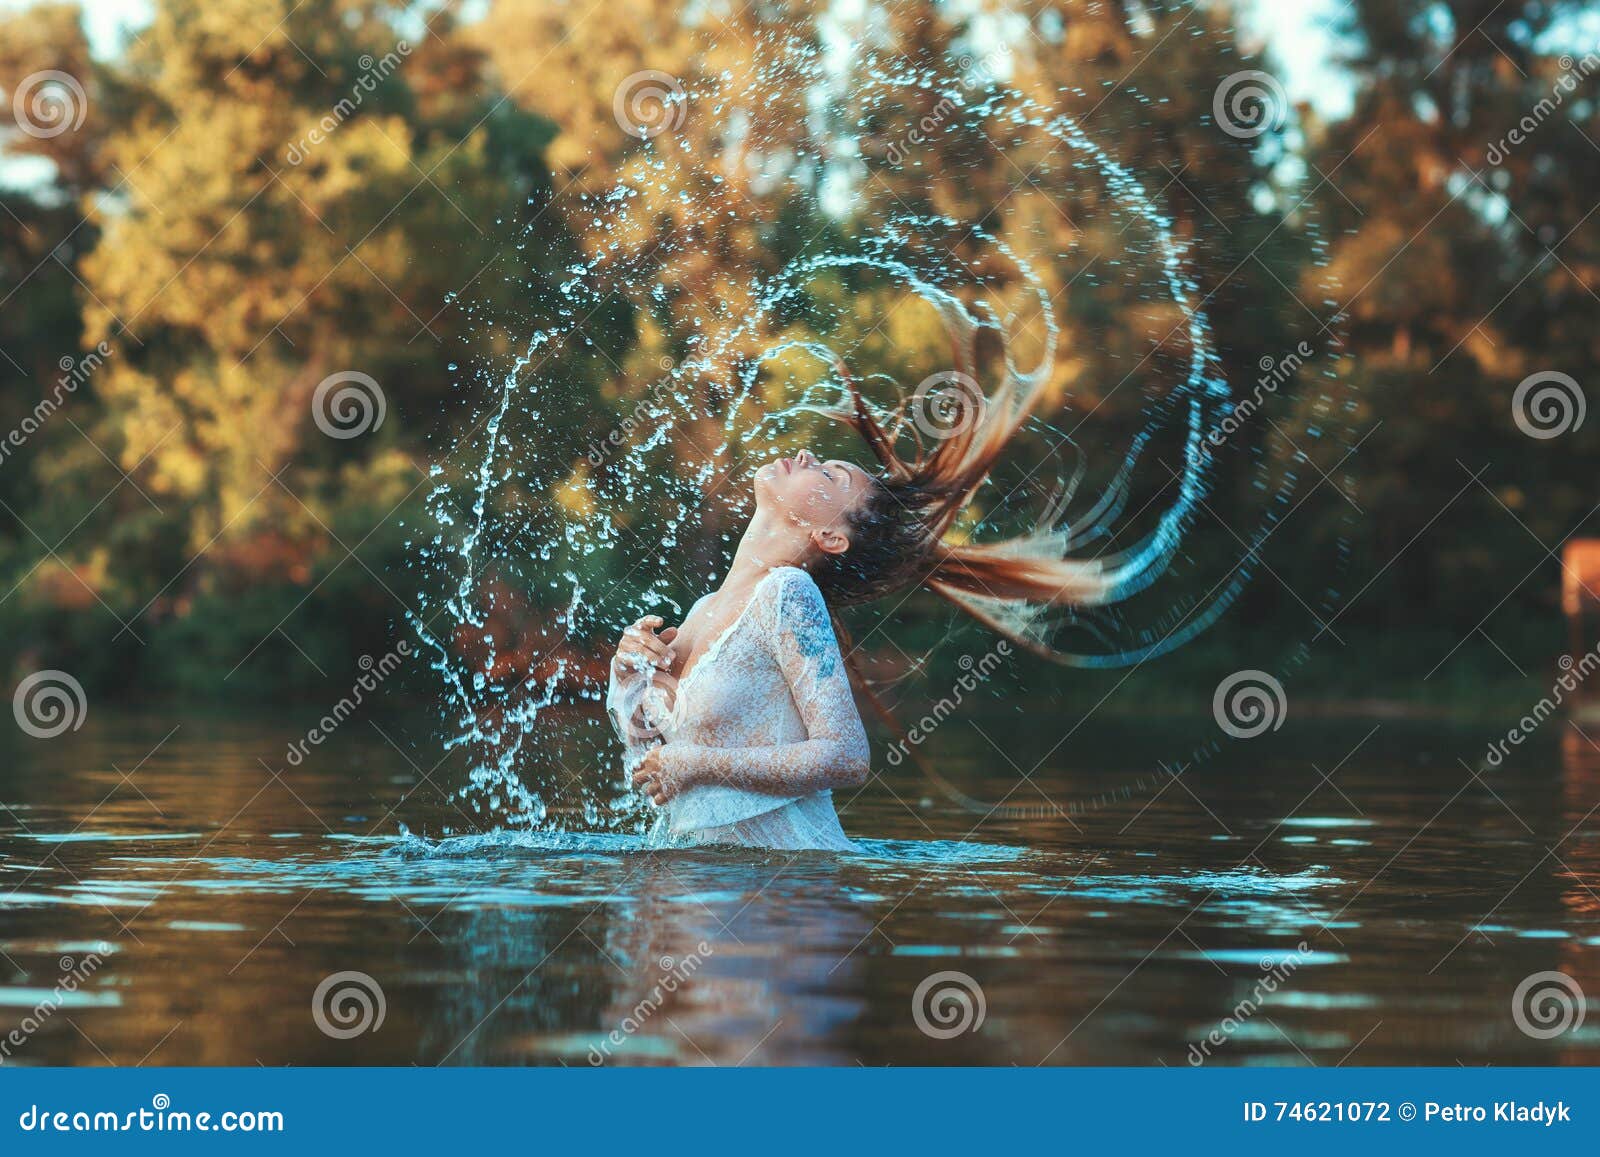 Women S Hair Makes Water Spray. Stock Photo - Image of flip, motion ...